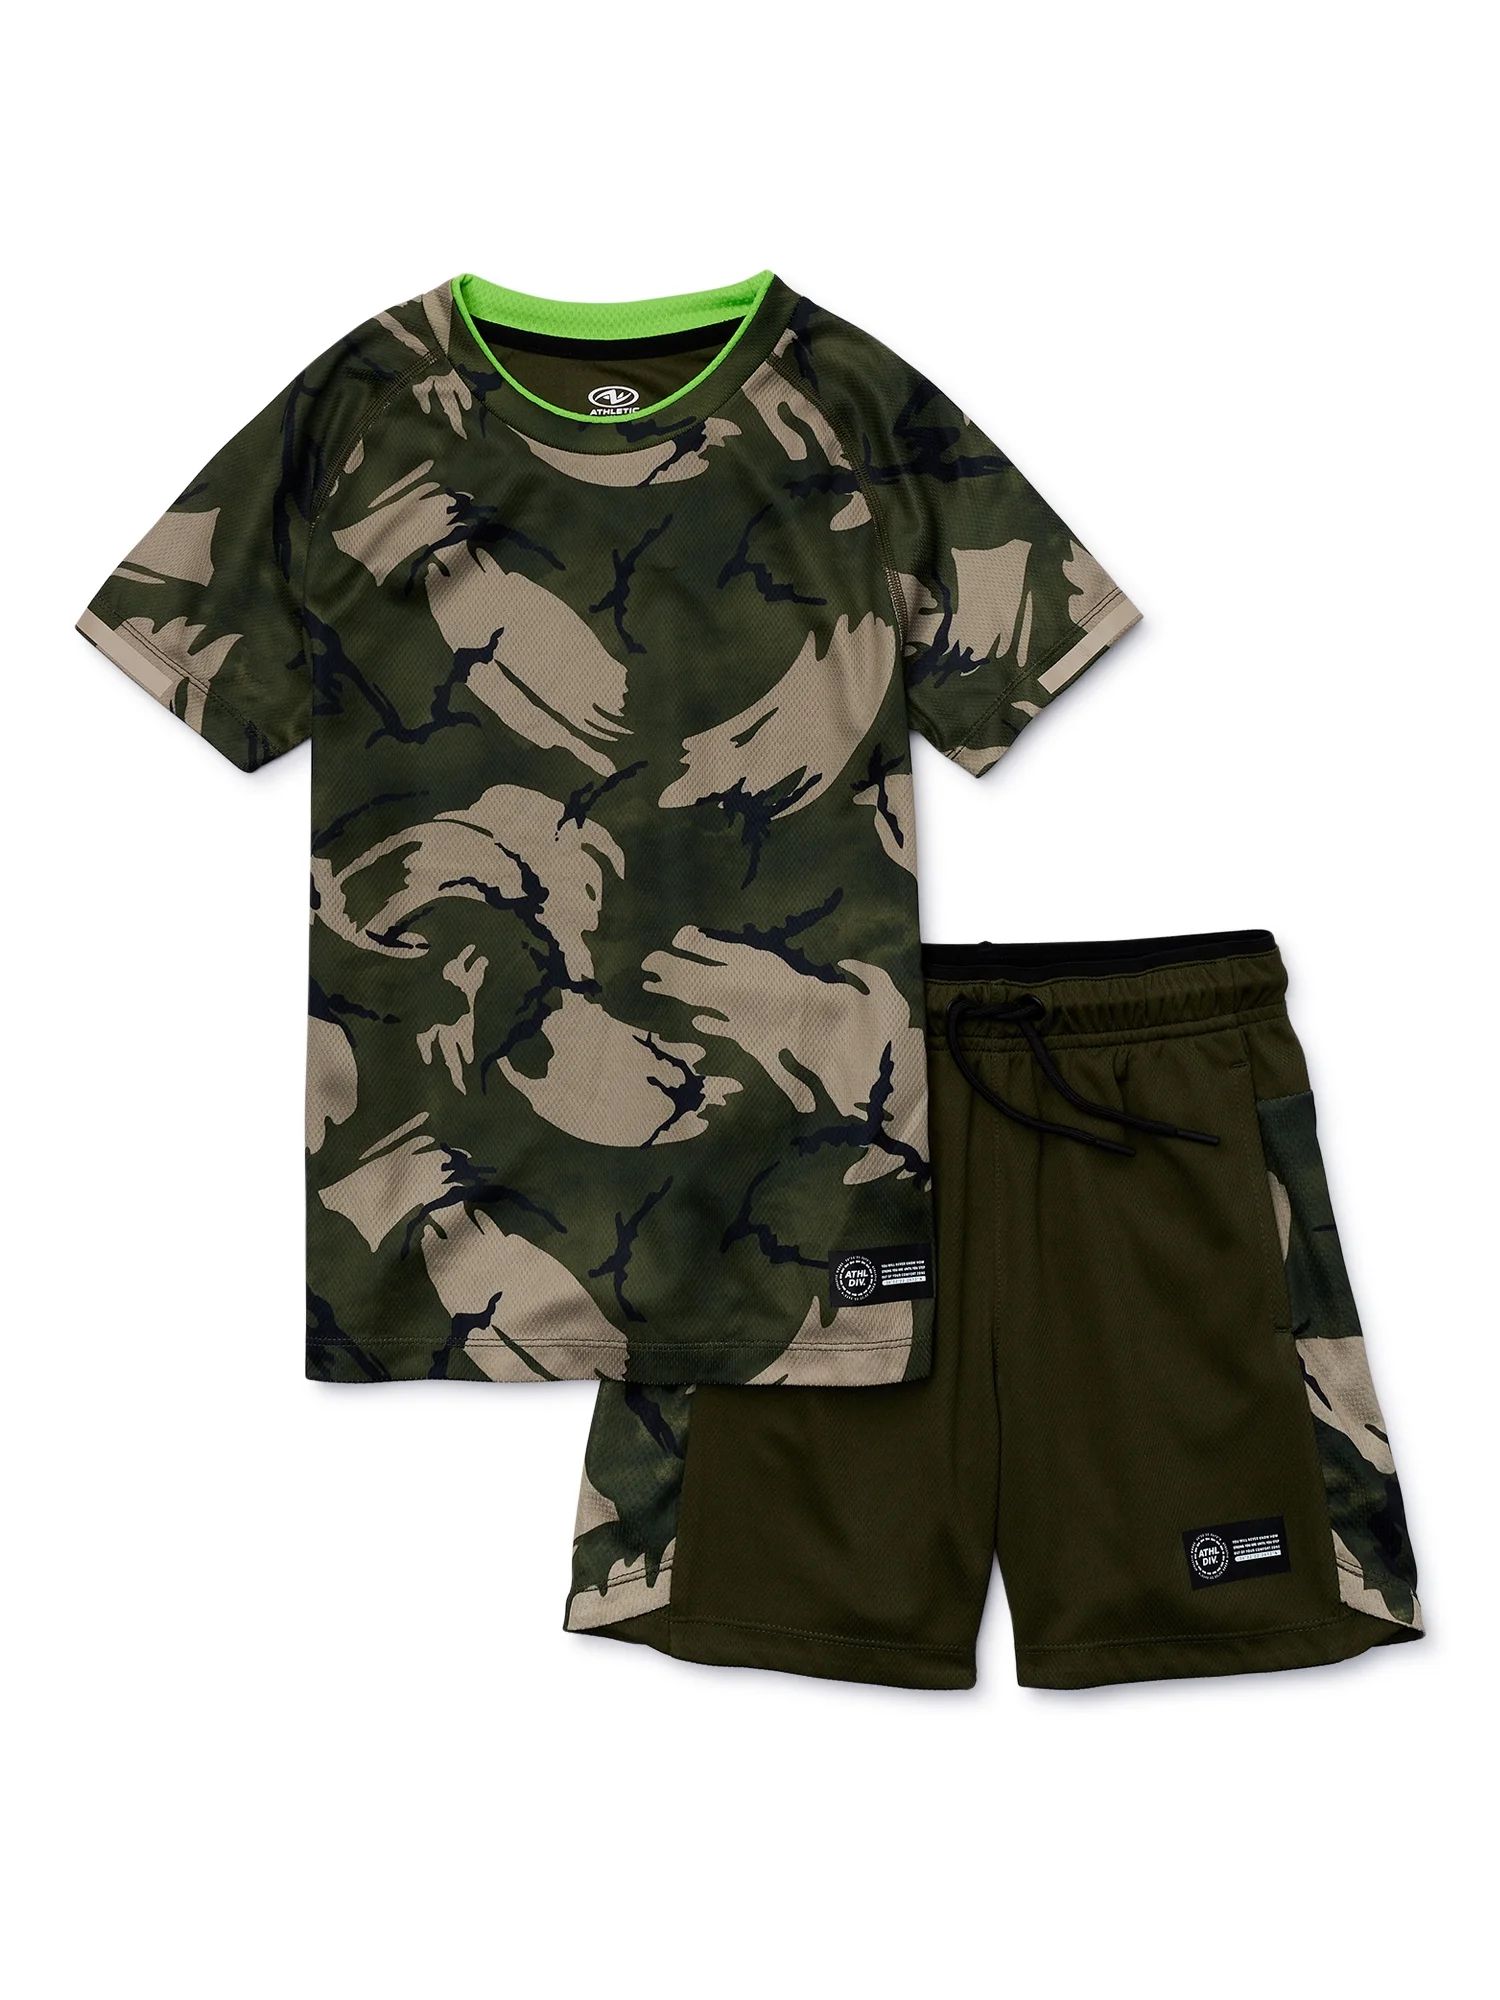 Athletic Works Boys Camo Printed Short Sleeve T-Shirt and Shorts Set, 2-Piece, Sizes 4-18 & Husky | Walmart (US)